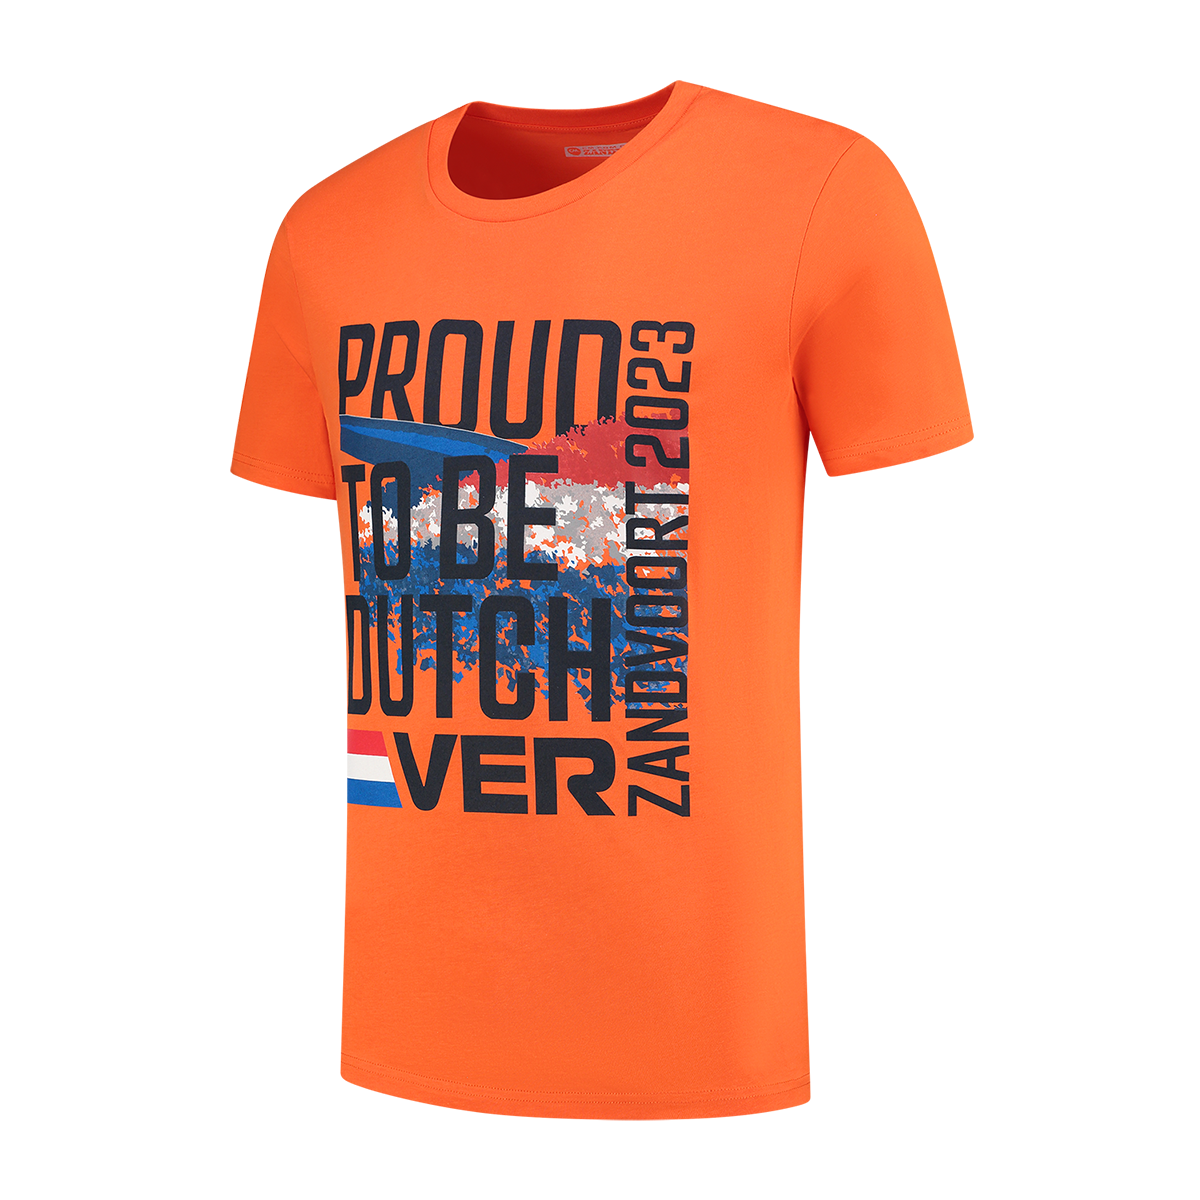 Proud to be Dutch - T-shirt Oranje - XXL - Max Verstappen